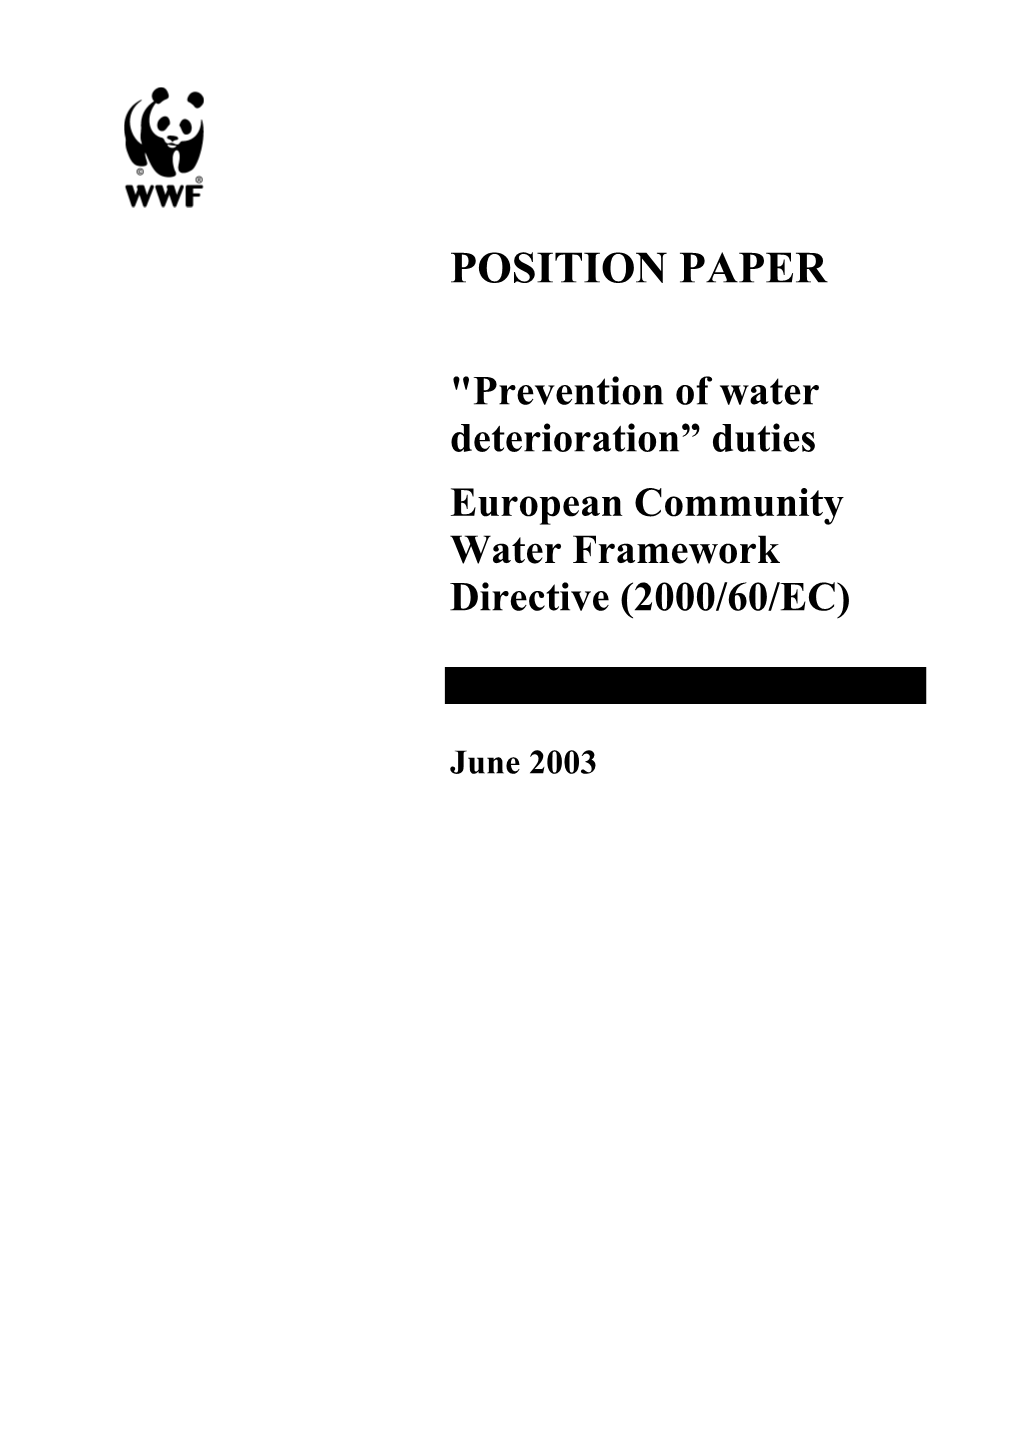 EC Water Framework Directive (2000/60/EC)